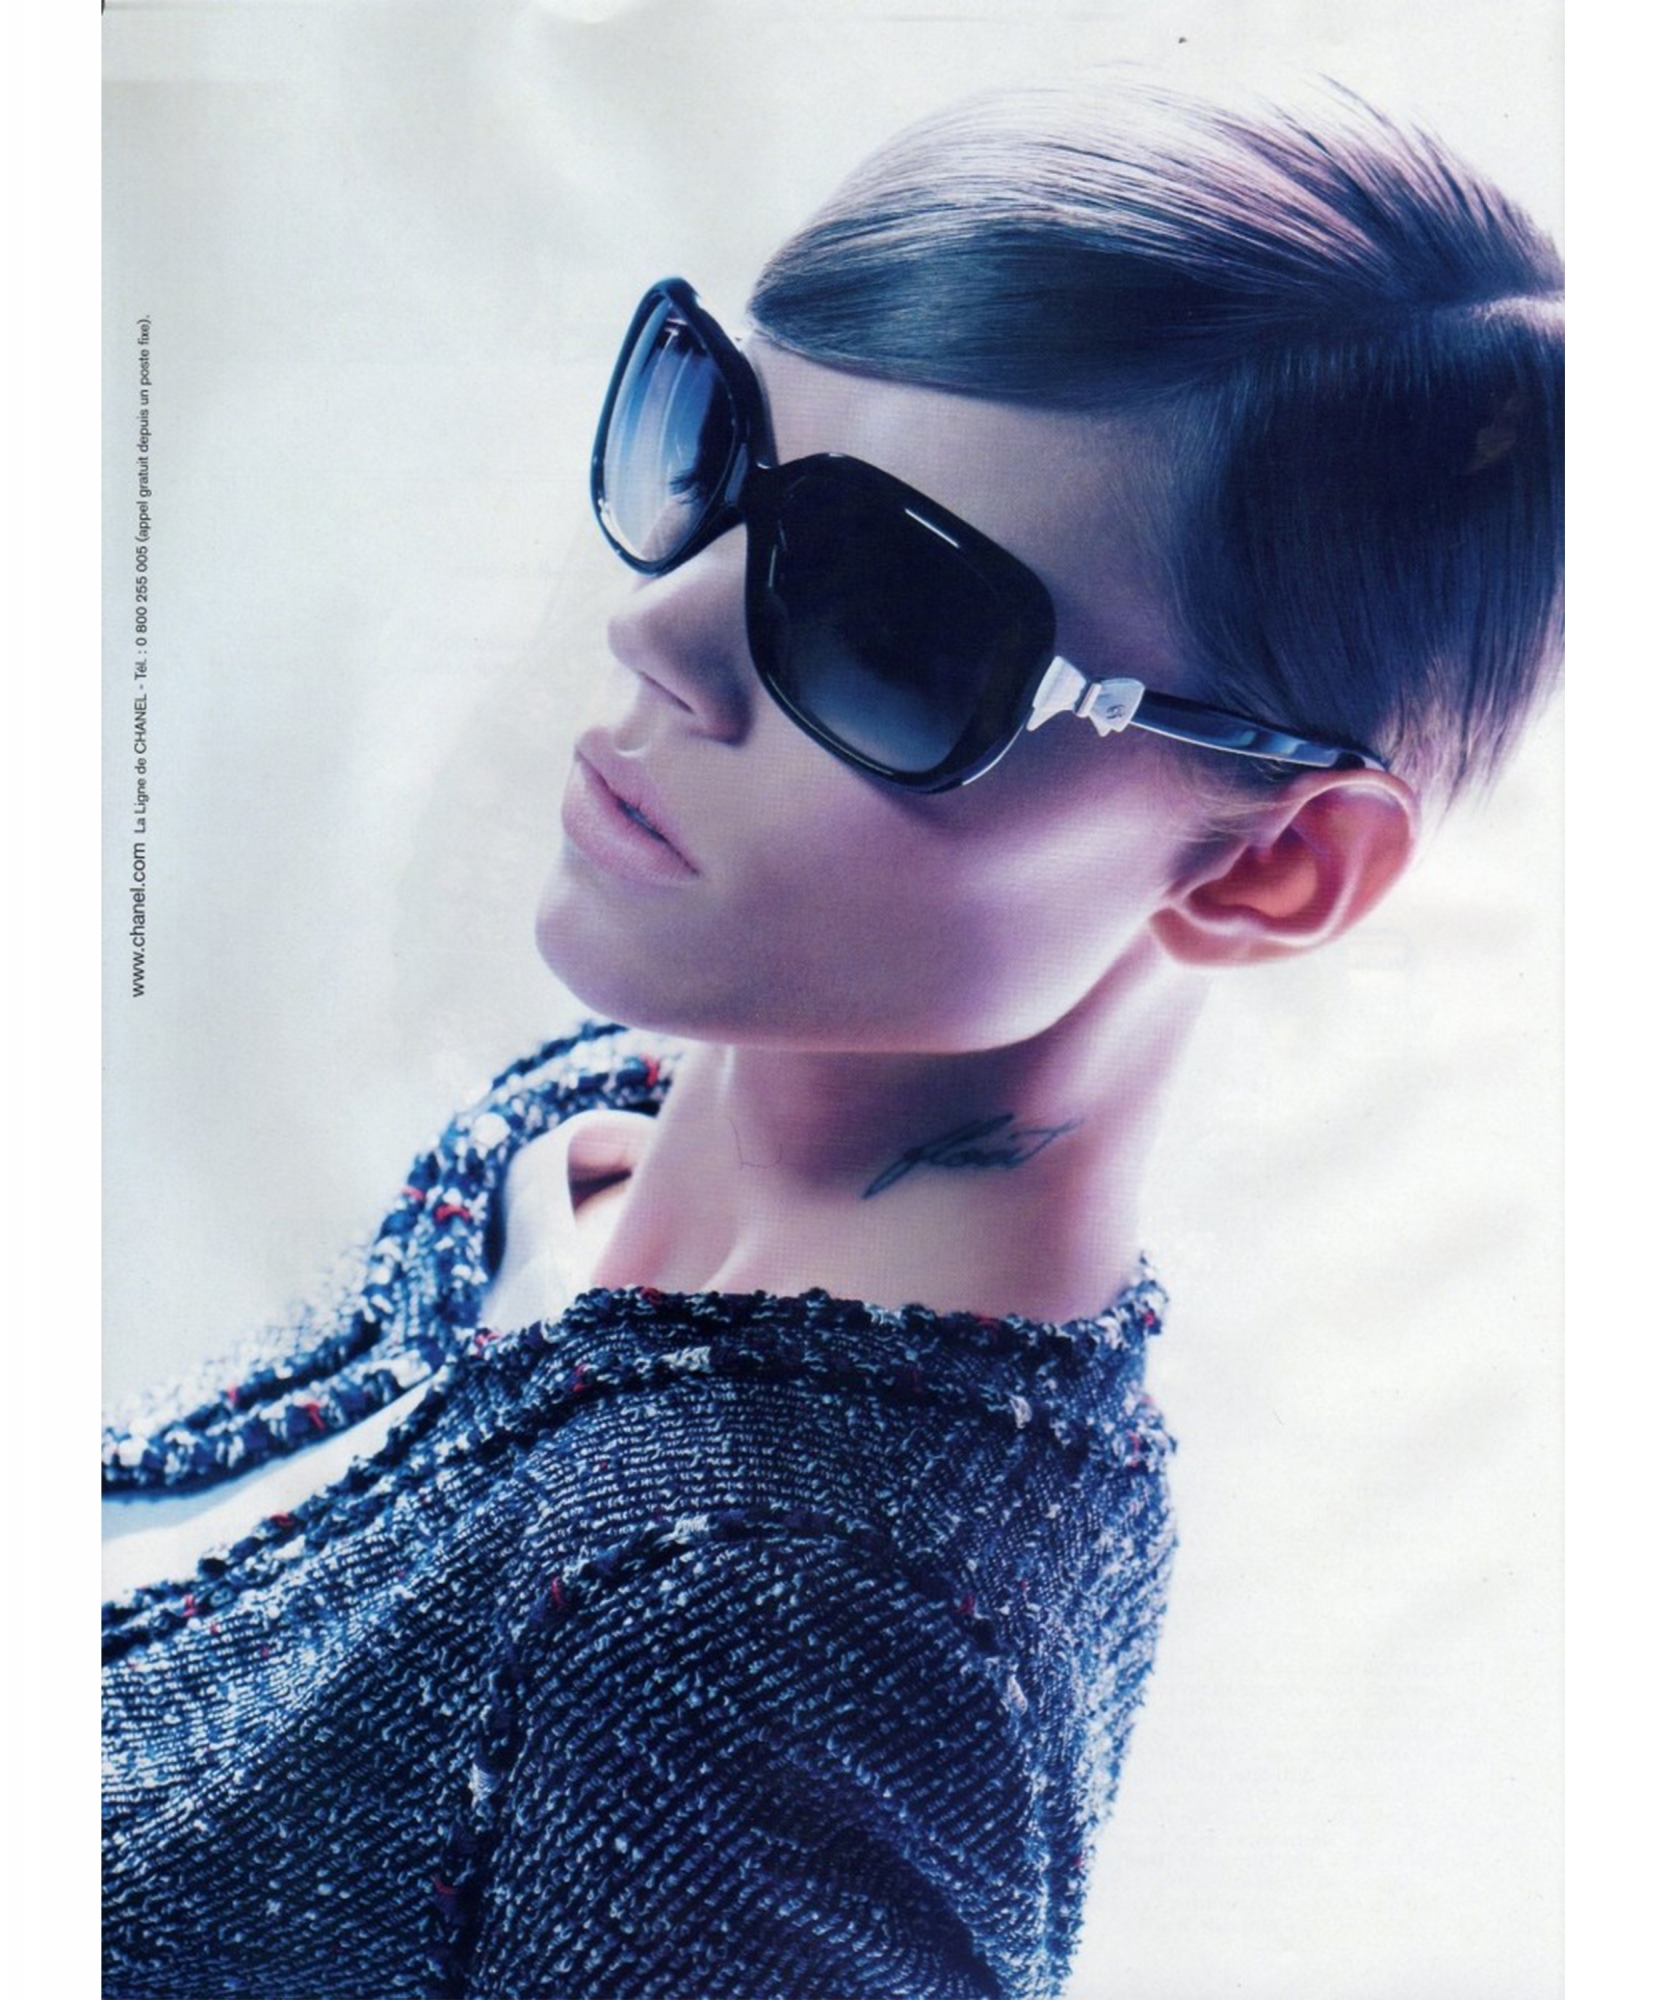 Chanel CC Bow Sunglasses 5171 - Chanel